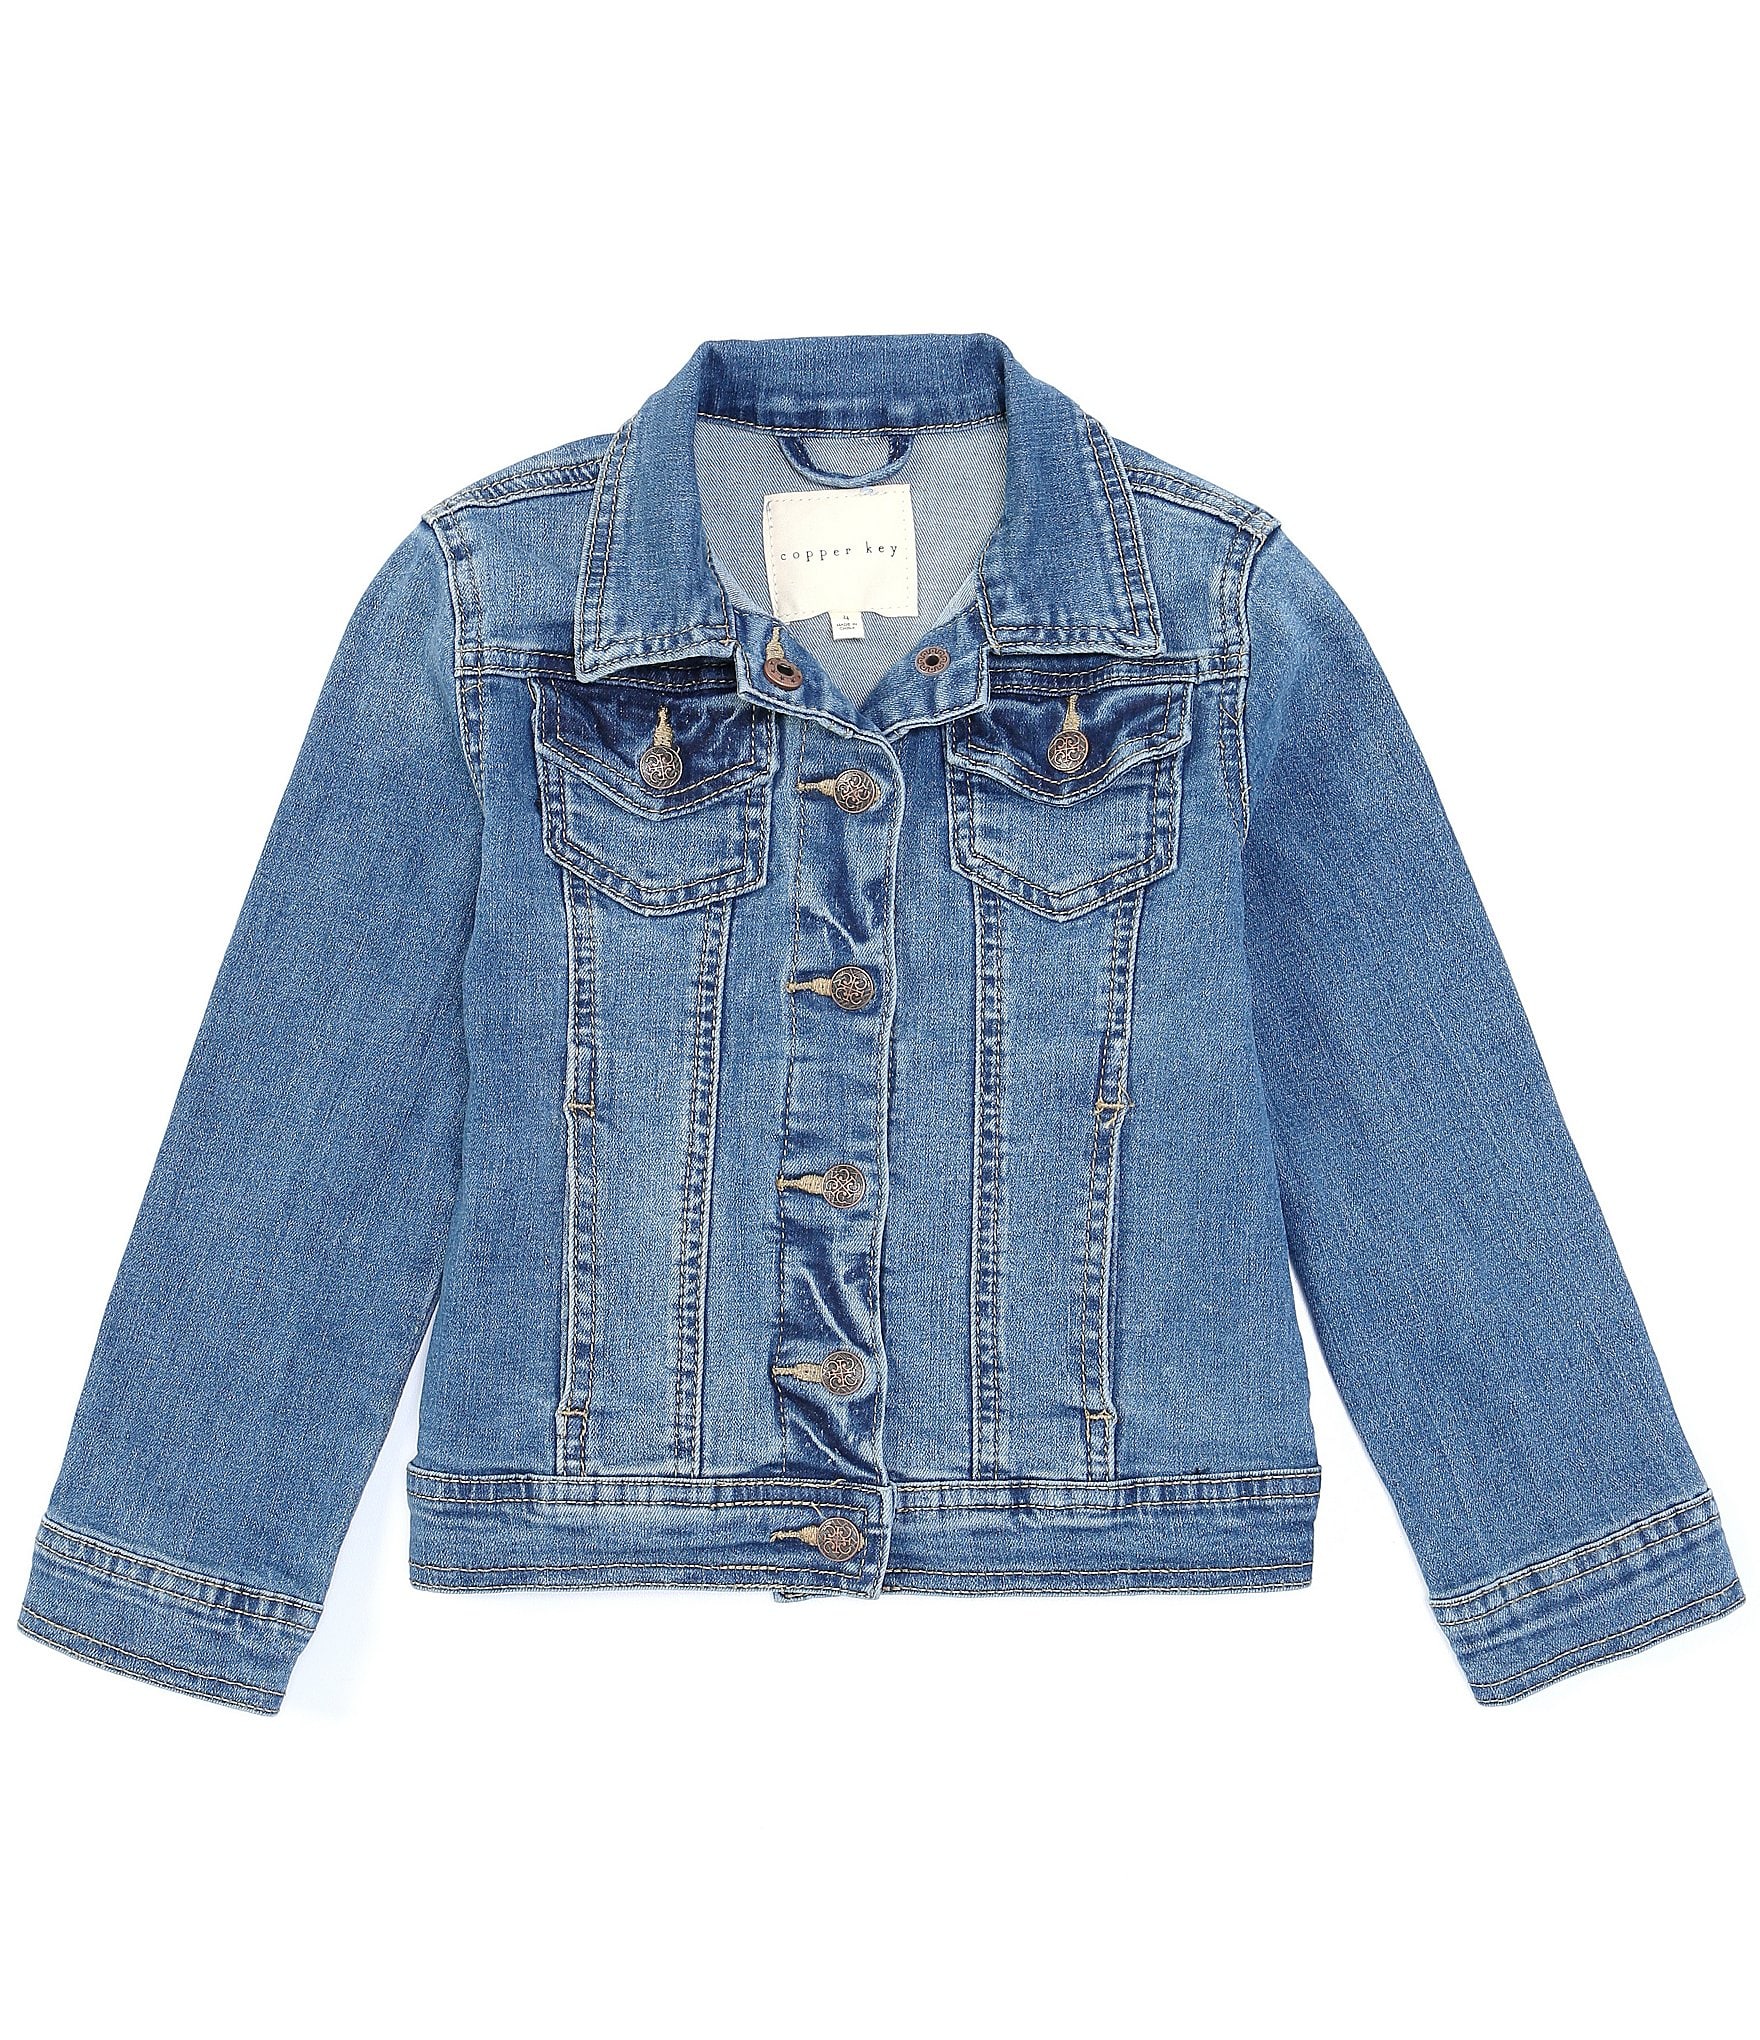 Copper Key Little Girls 2-6X Denim Jacket | Dillard's